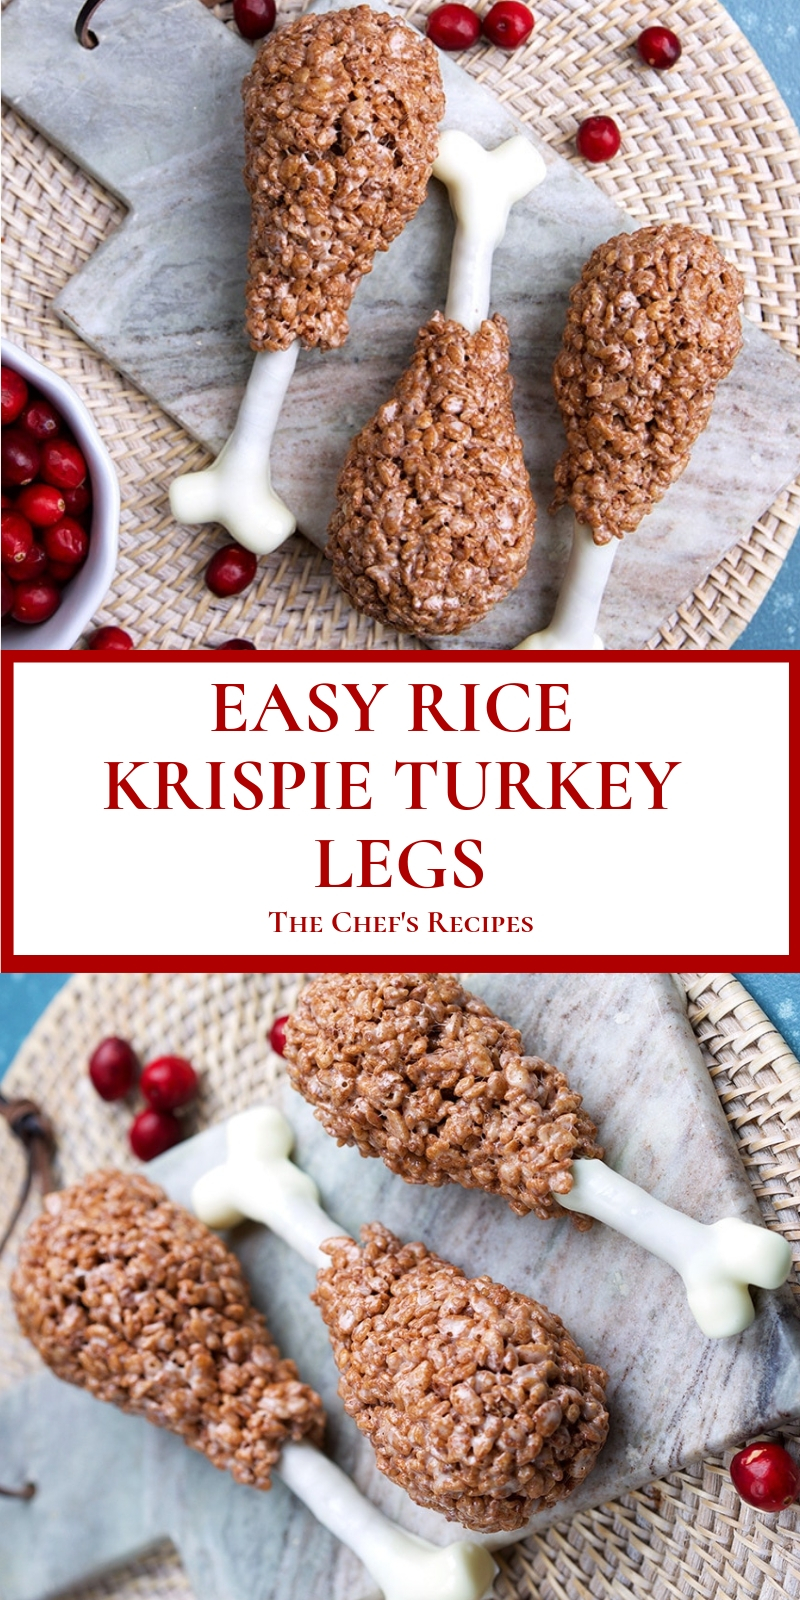 EASY RICE KRISPIE TURKEY LEGS